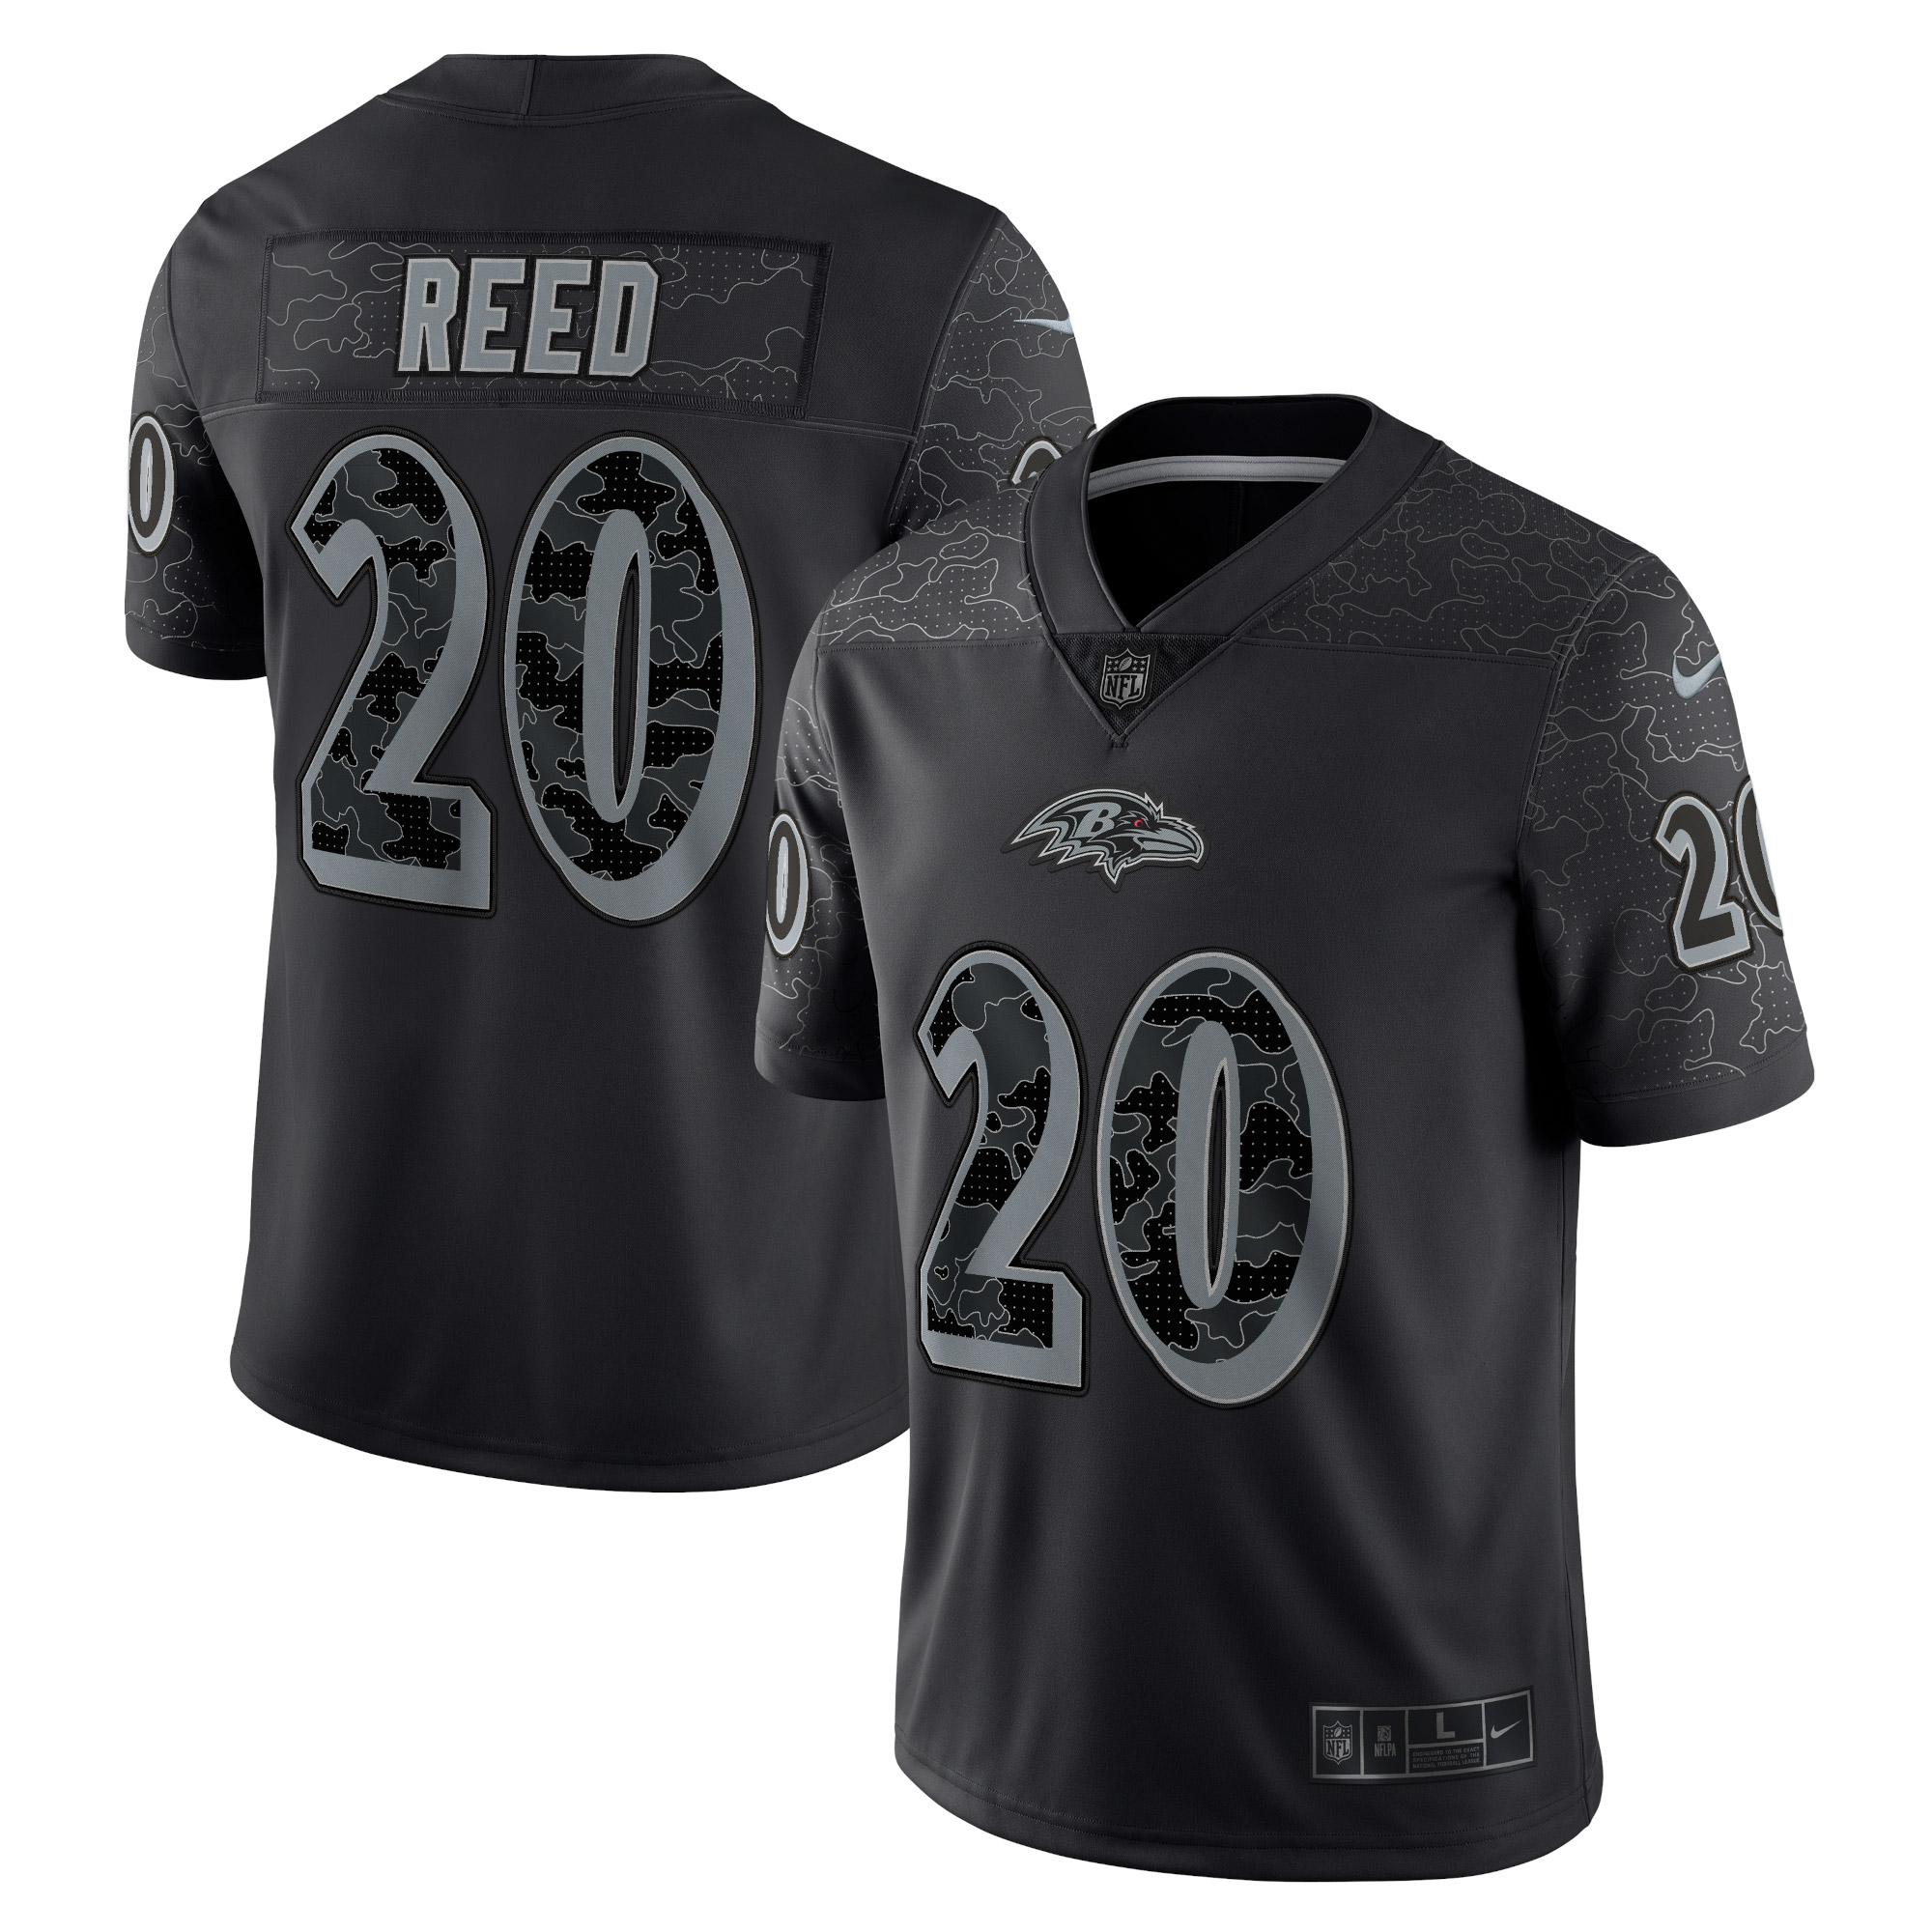 Men's Baltimore Ravens Jerseys Black Ed Reed Retired Player RFLCTV Limited Style